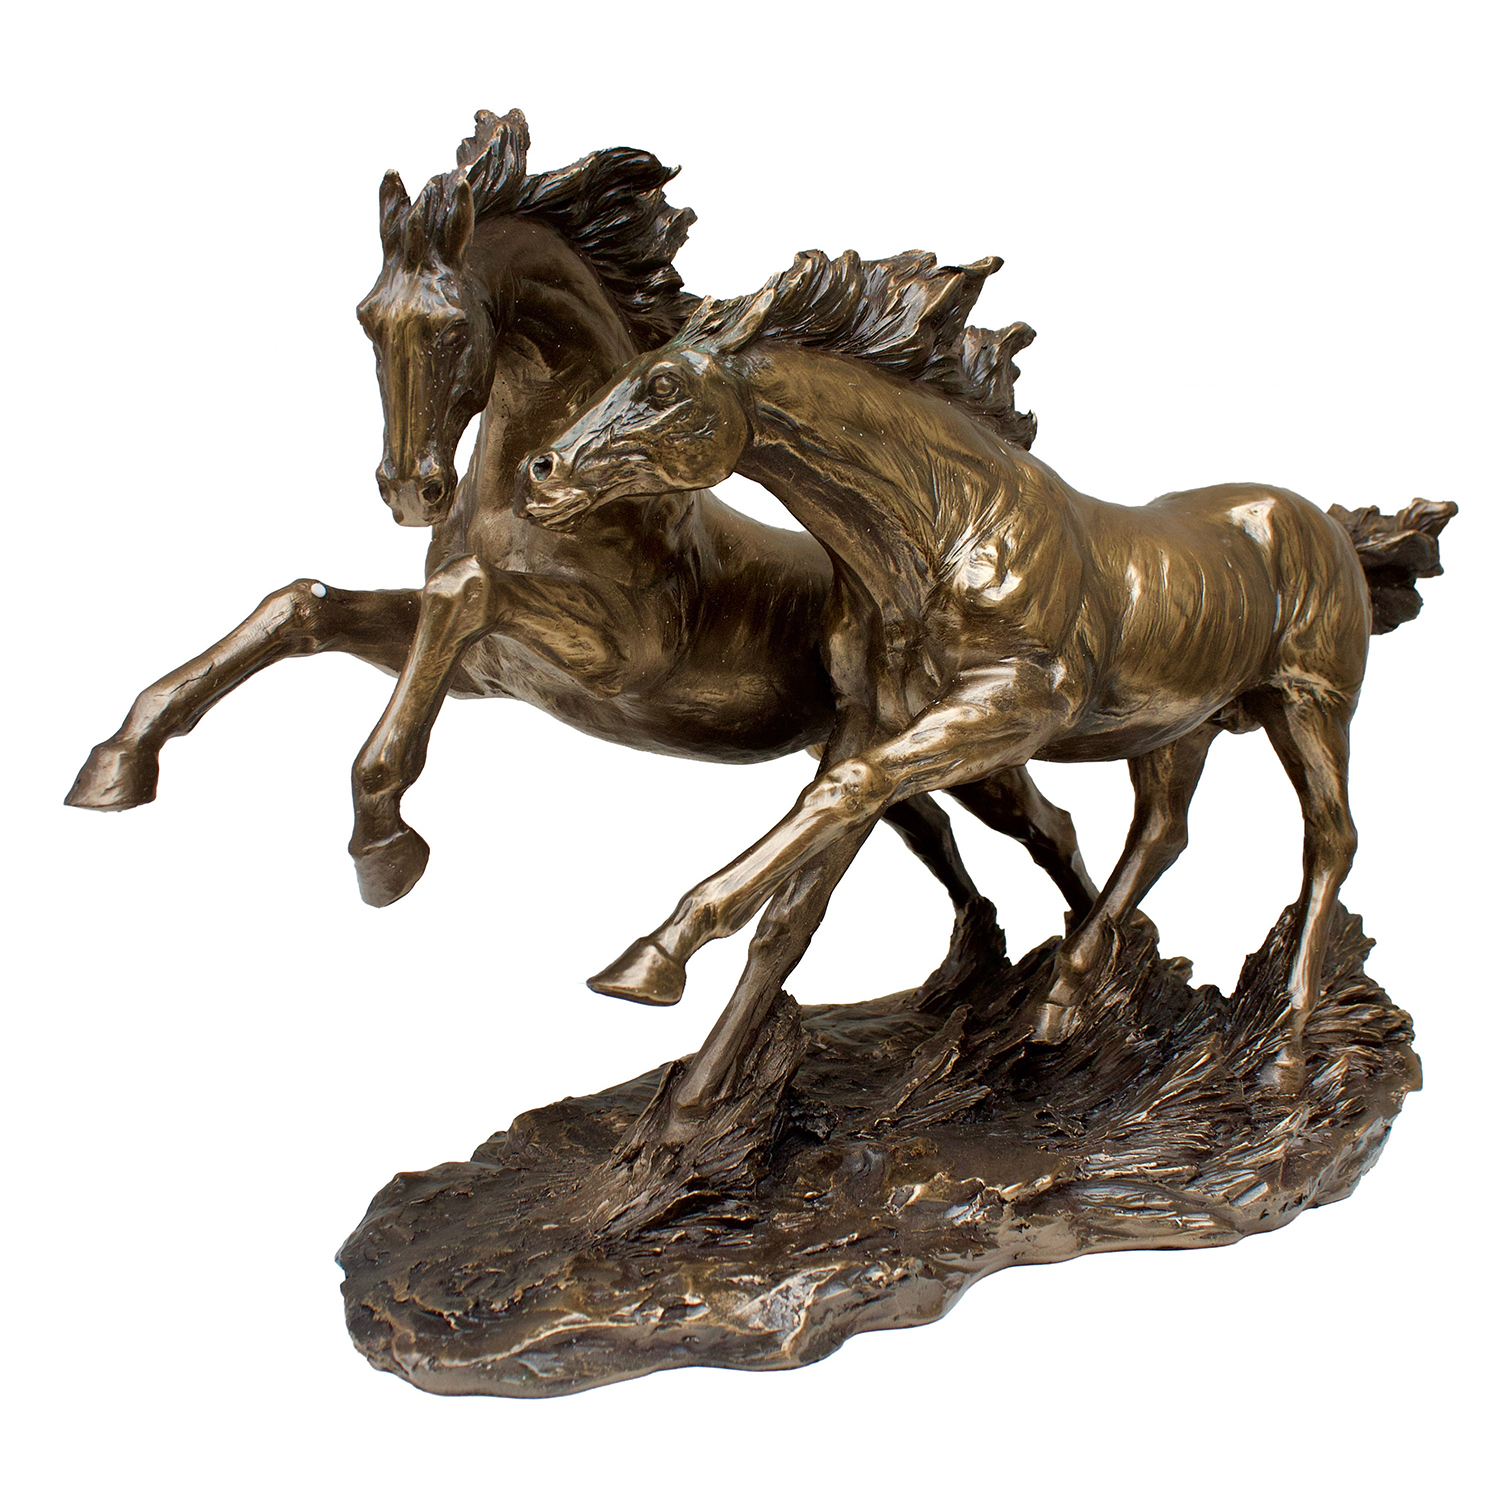 Galloping Horse Figurine